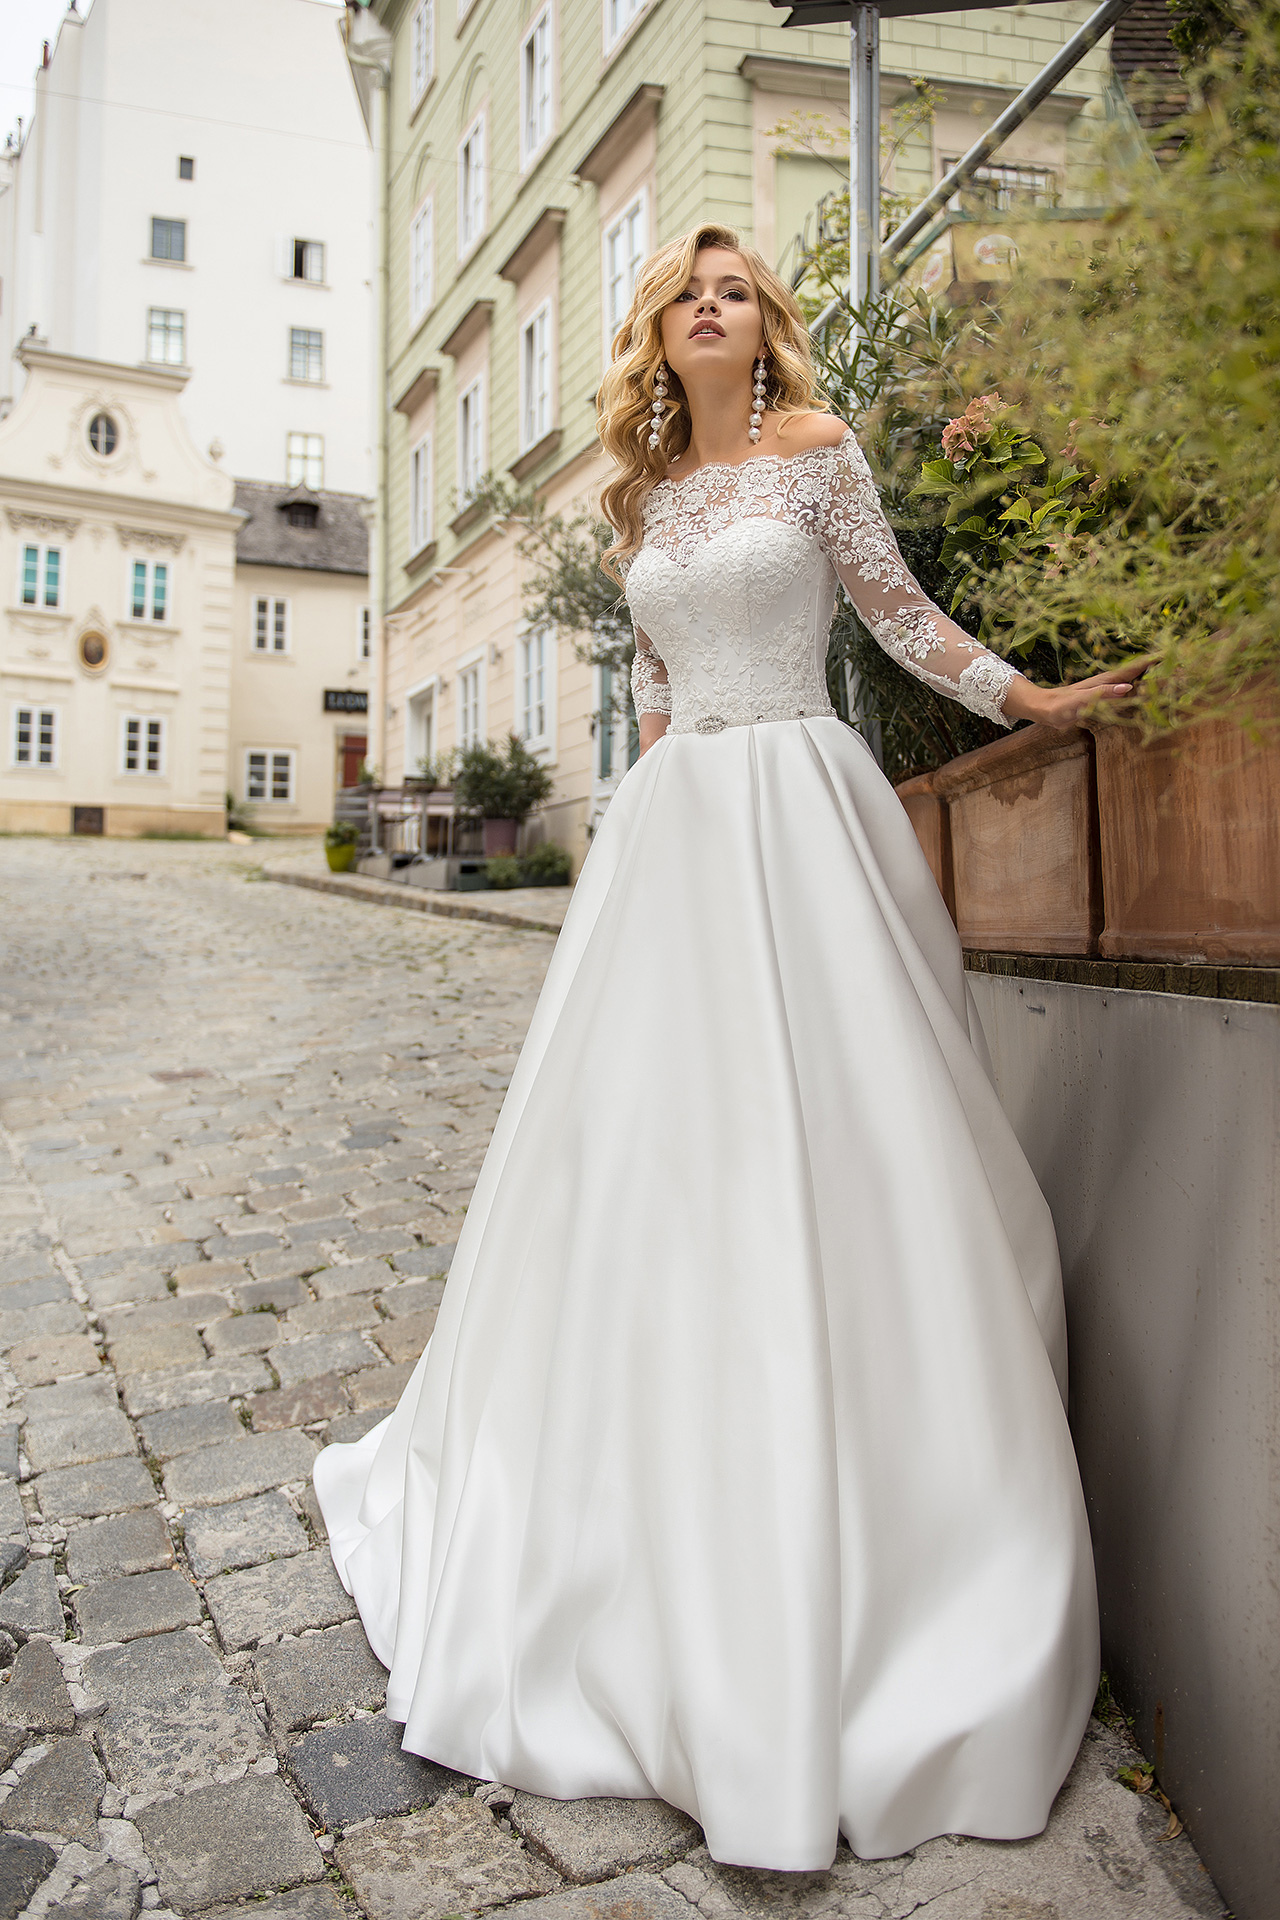 Sexy wedding dress silk, Boho style wedding dress, Long sleeves wedding dress, Embroidered lace bridal gown, Nina